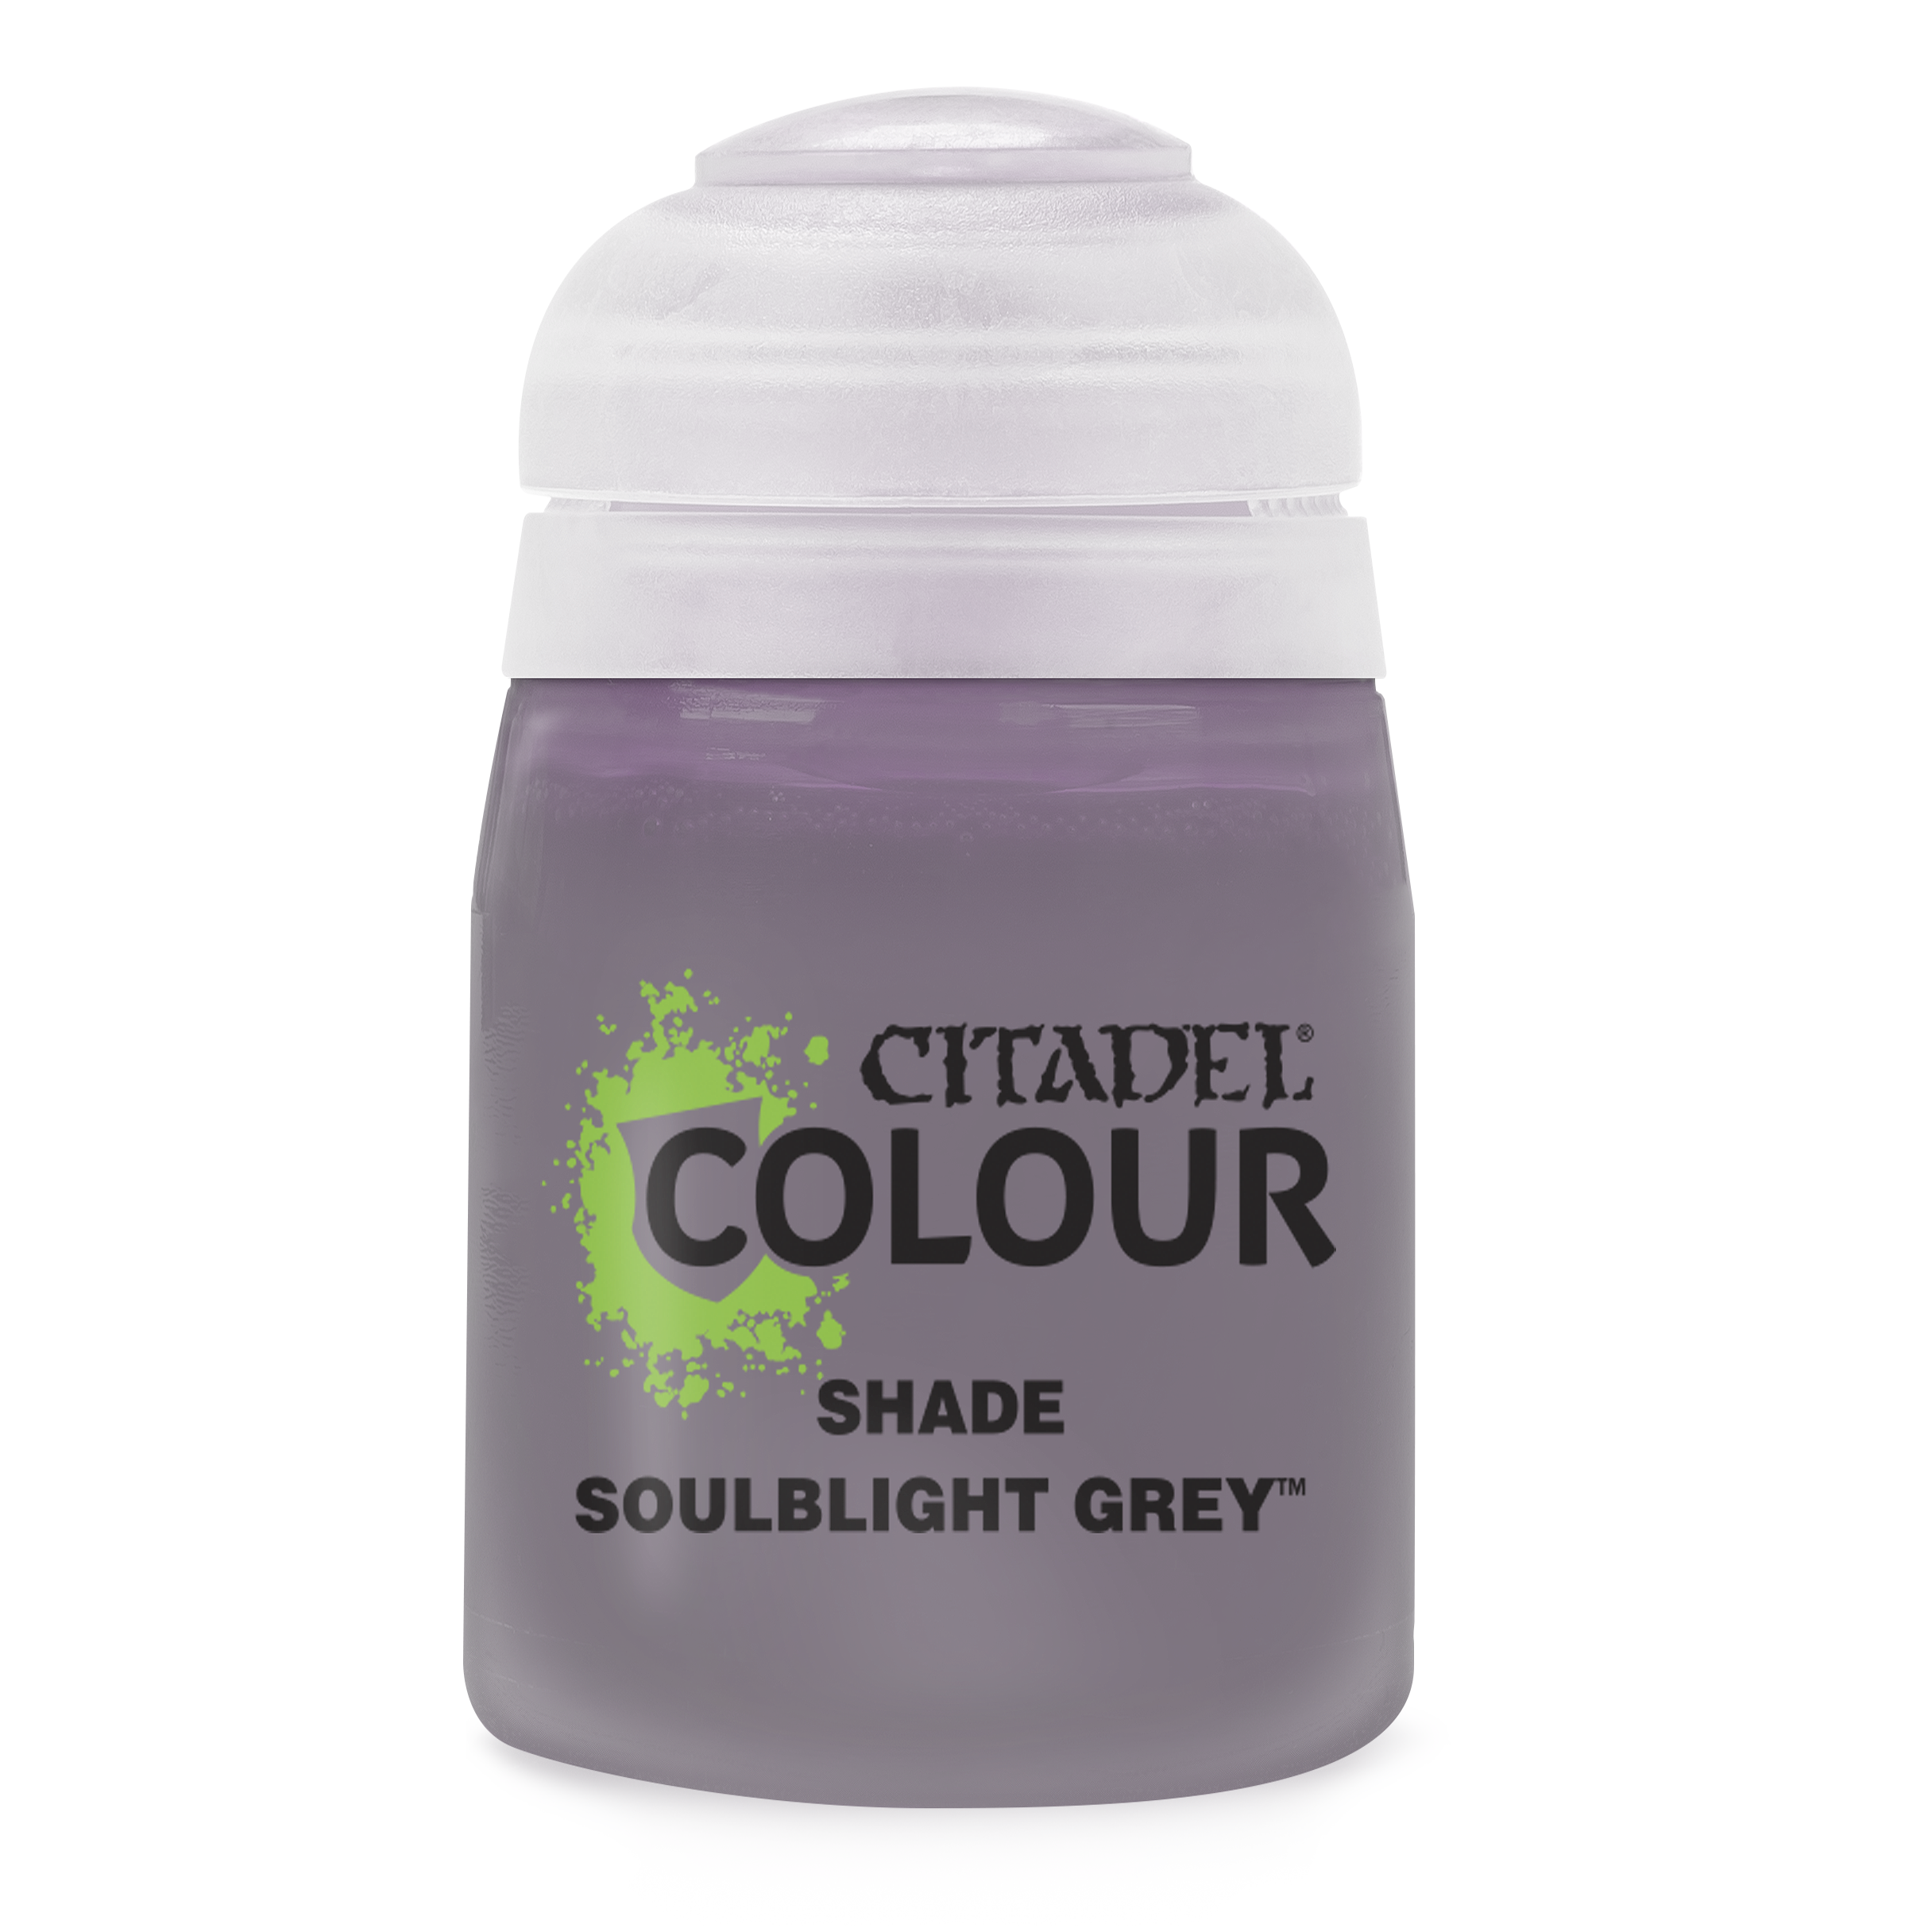 Soulblight Grey - Citadel Shade Colour